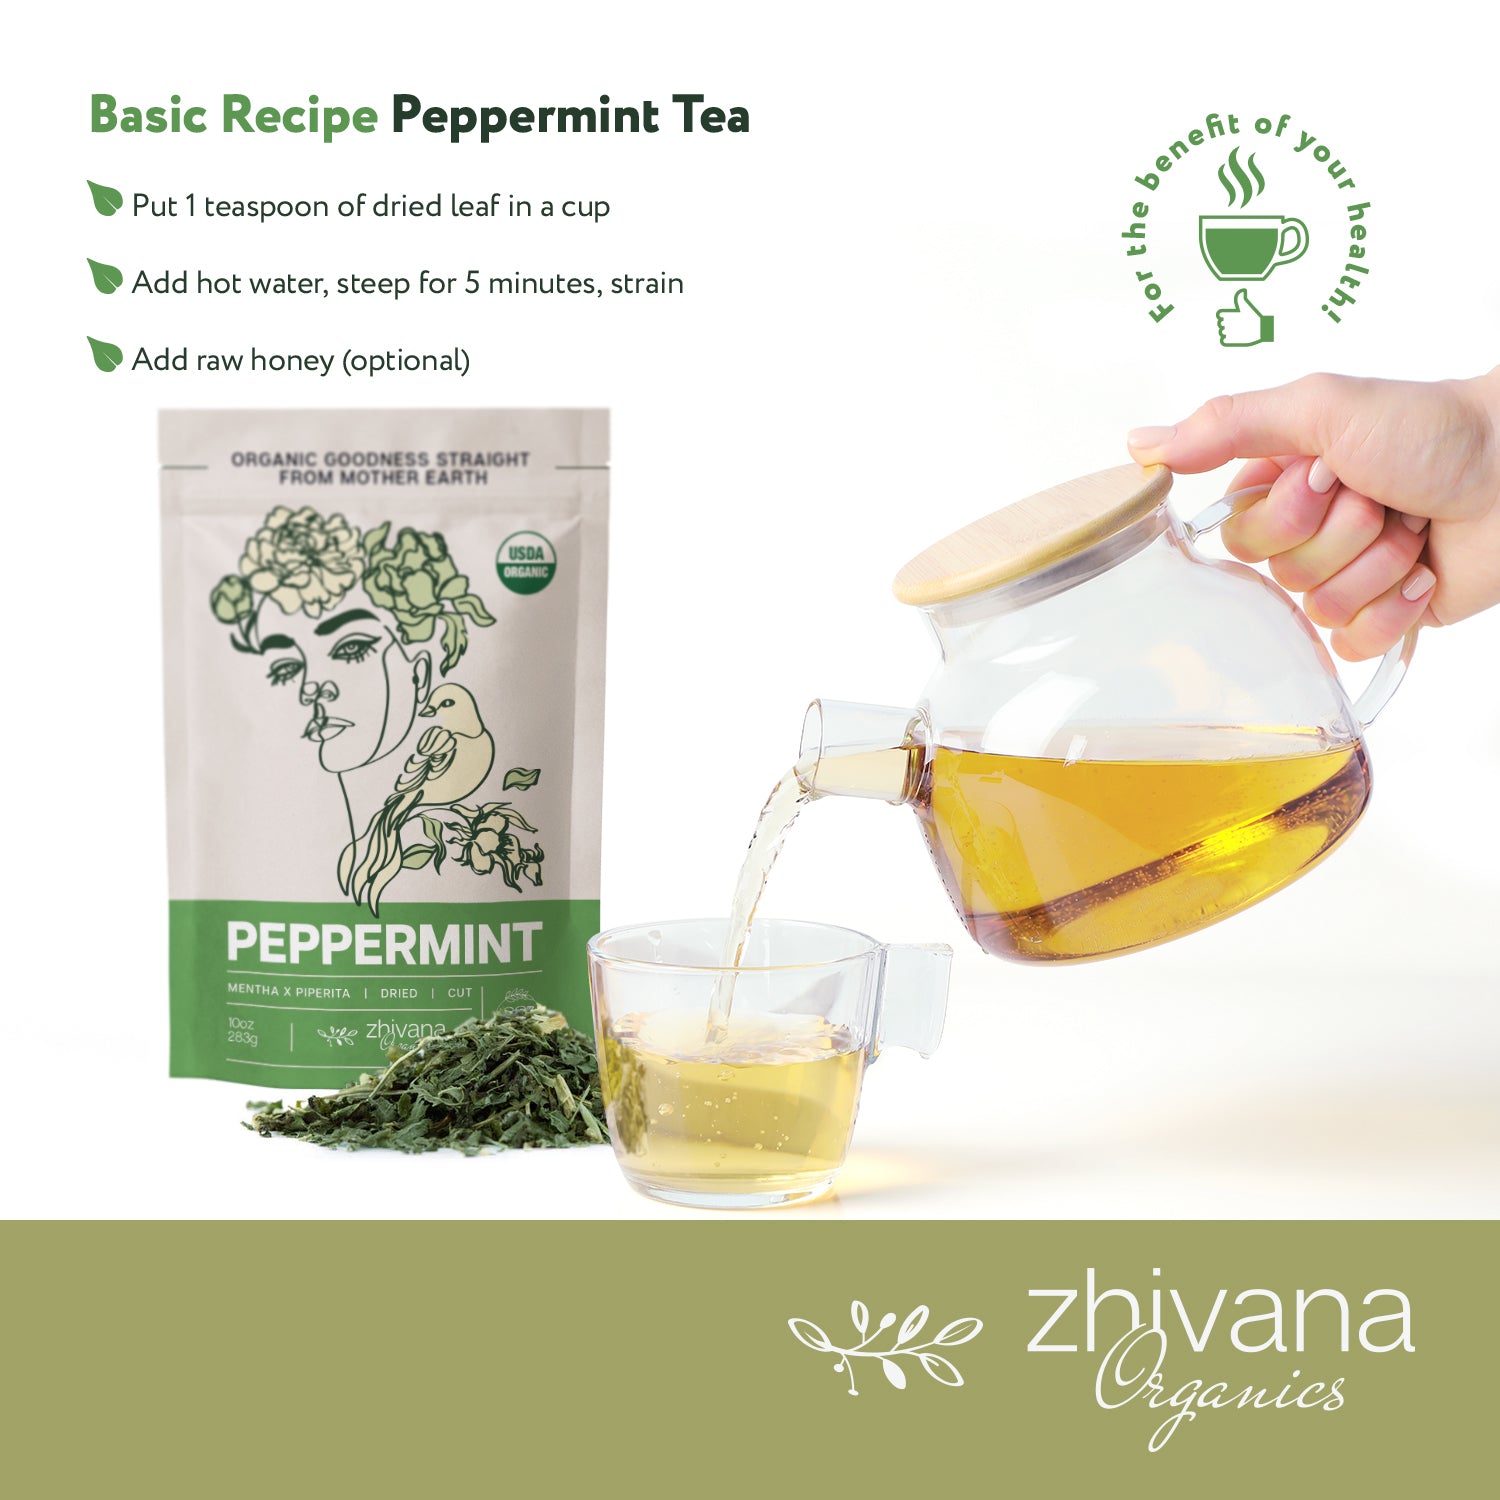 Peppermint Dried Cut & Sifted - Zhivana Organics